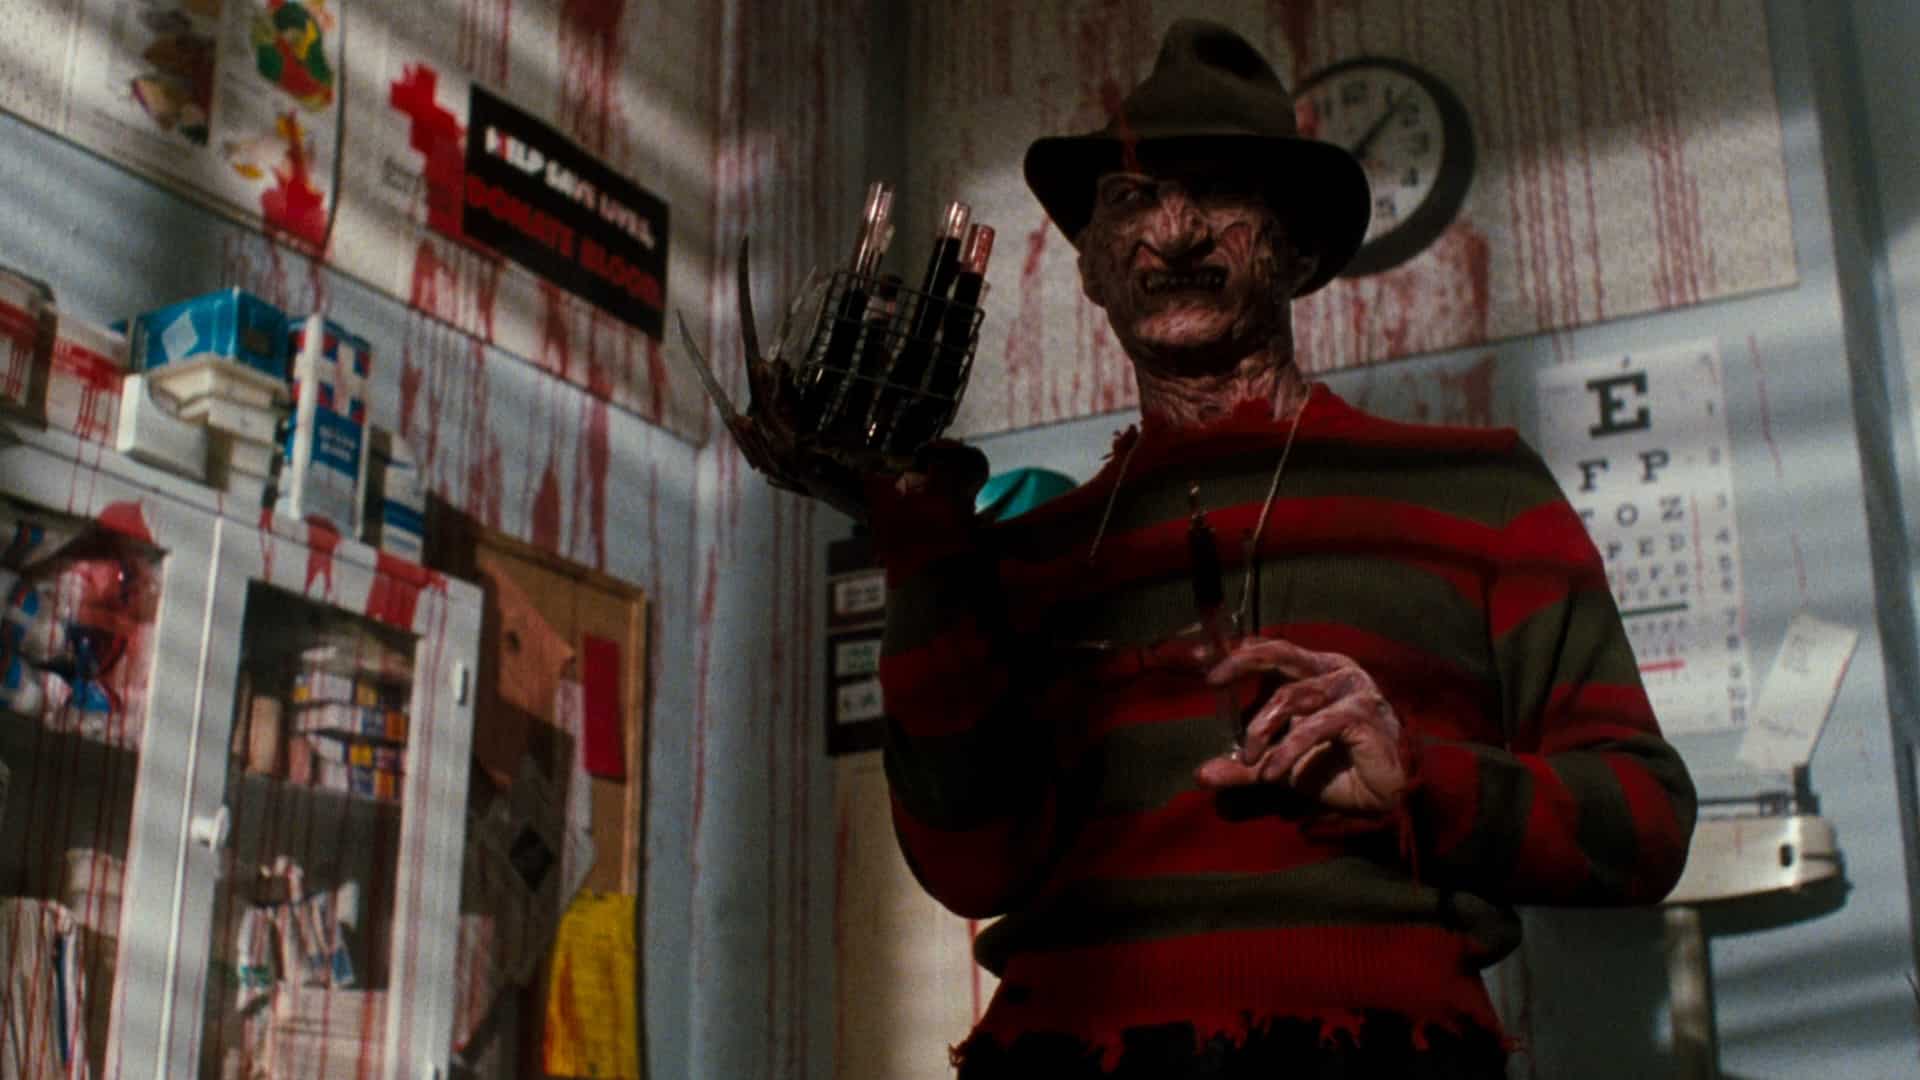 Horror History: A Nightmare on Elm Street (1984) - Morbidly Beautiful